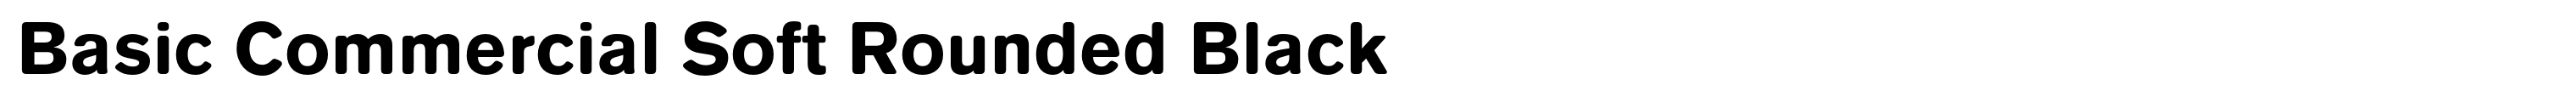 Basic Commercial Soft Rounded Black